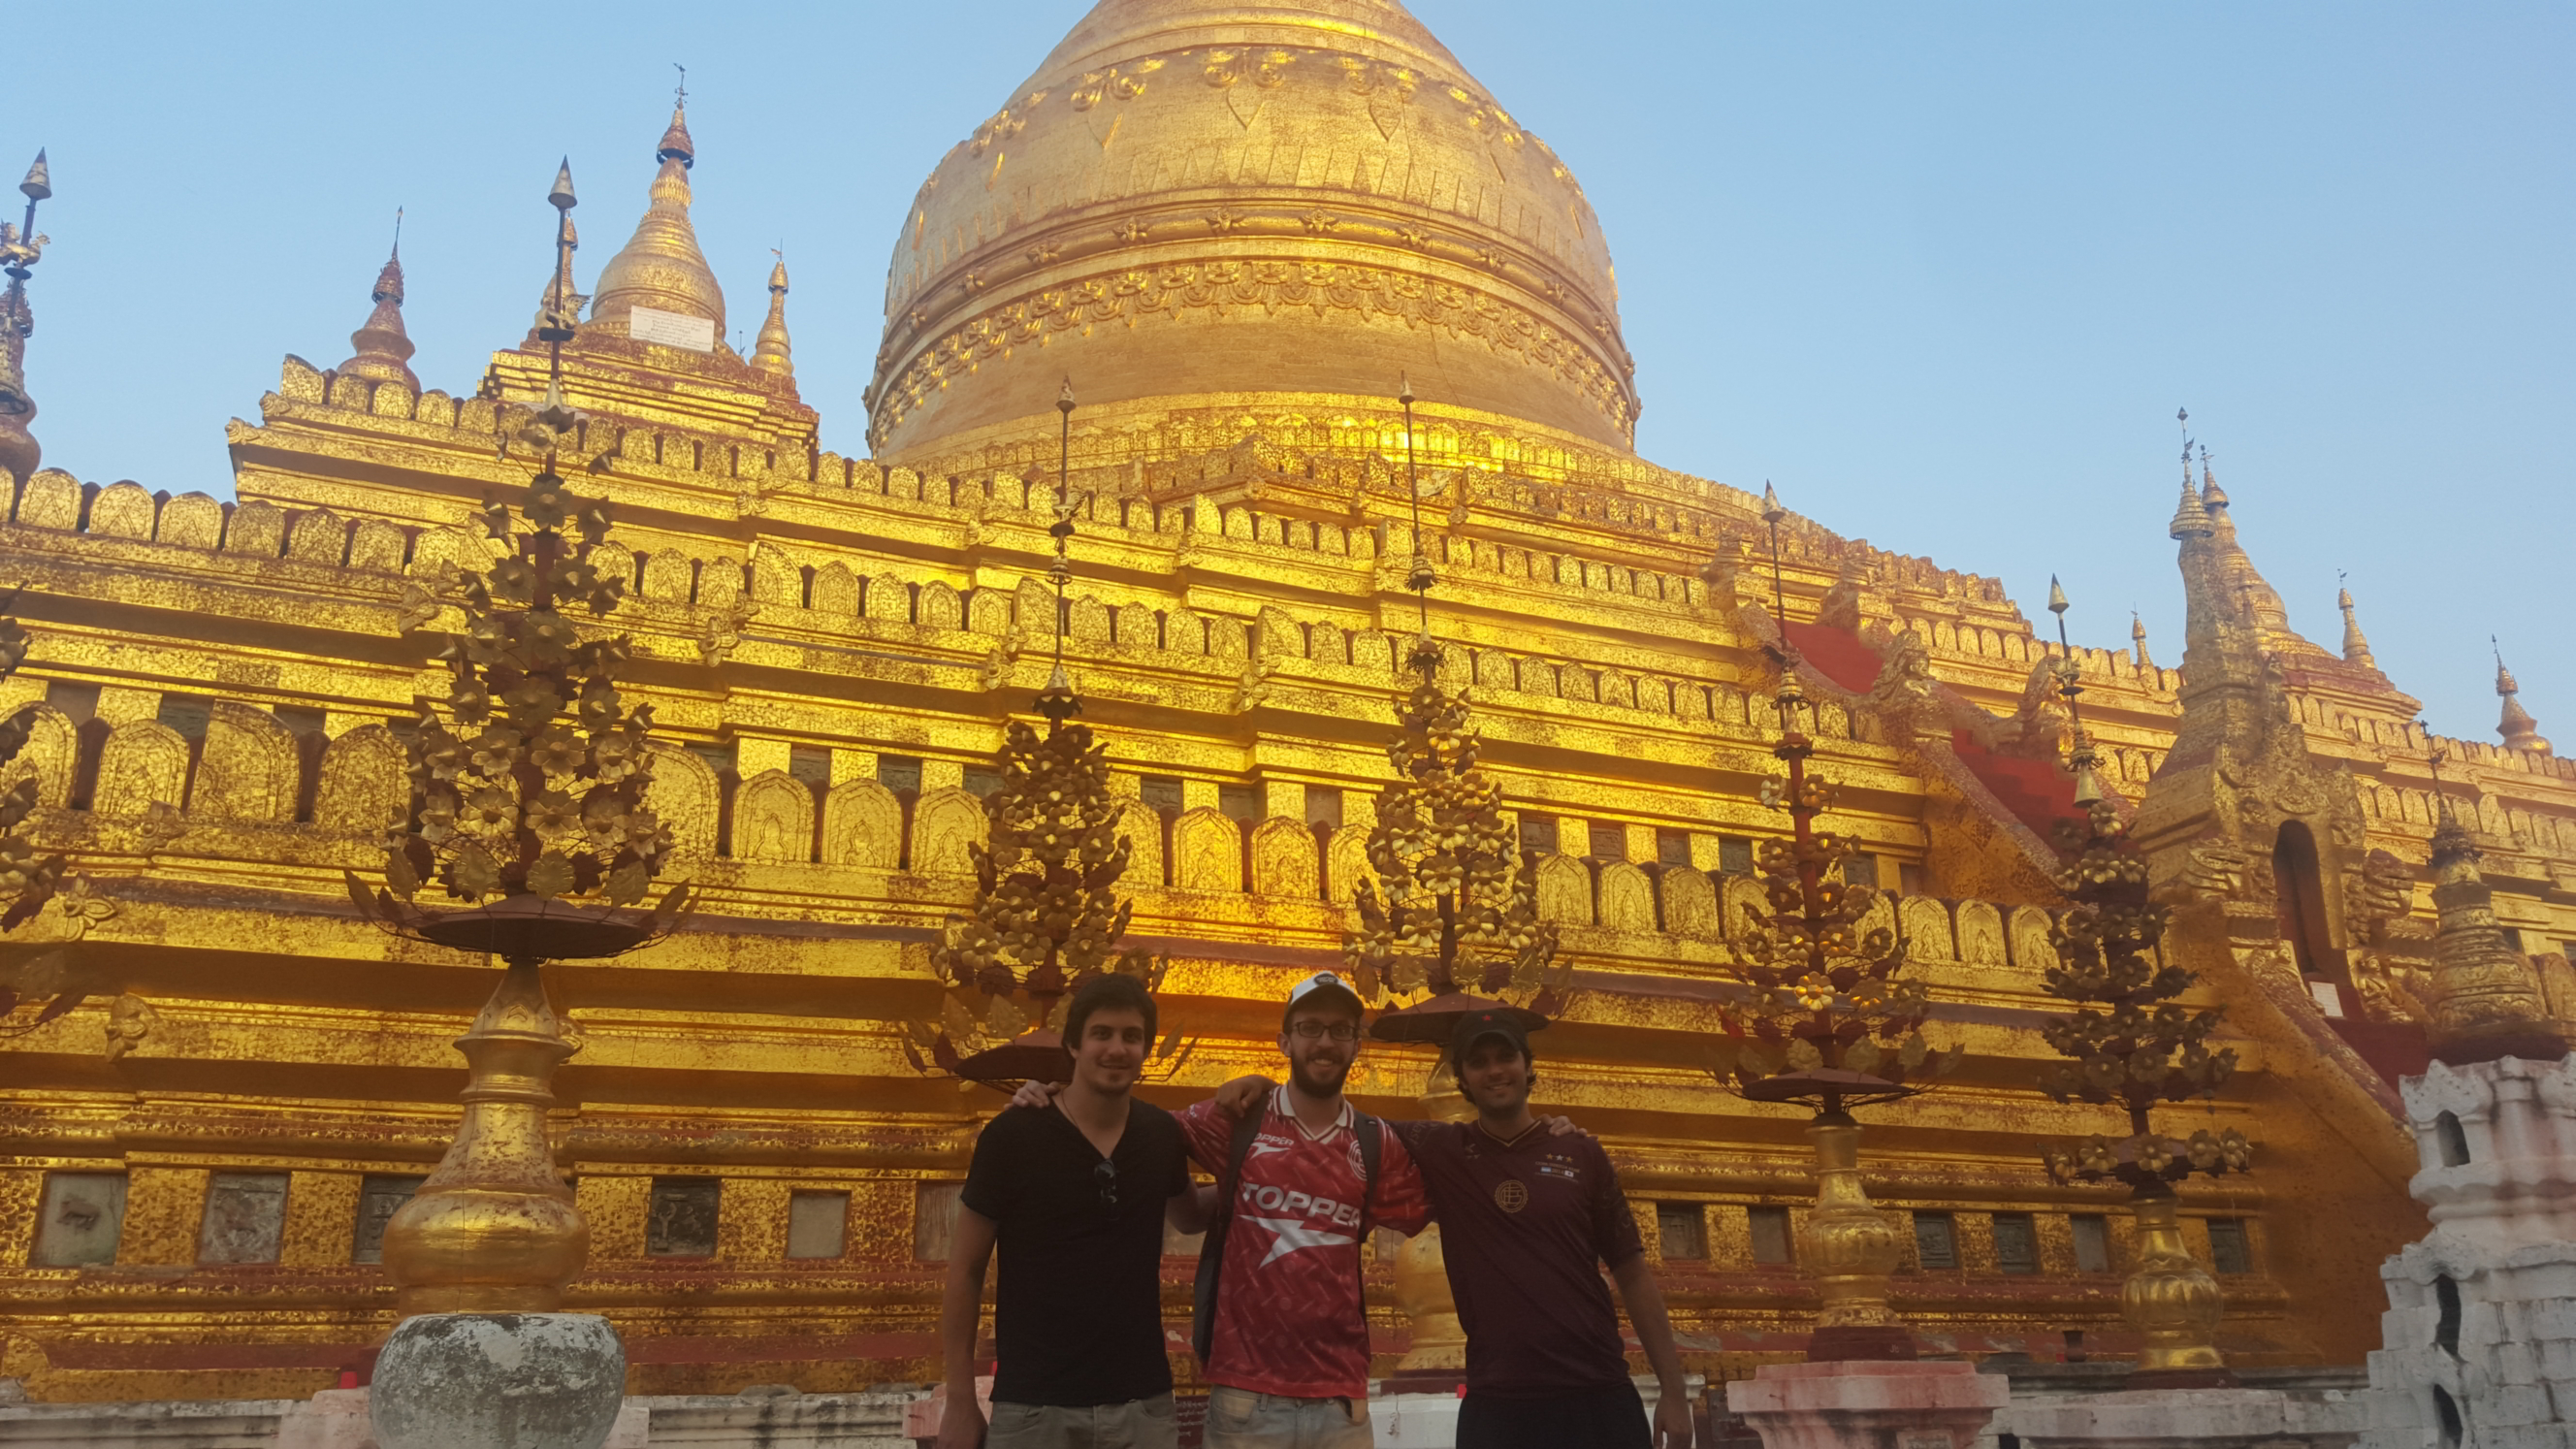 Shwe zi gone Pagoda